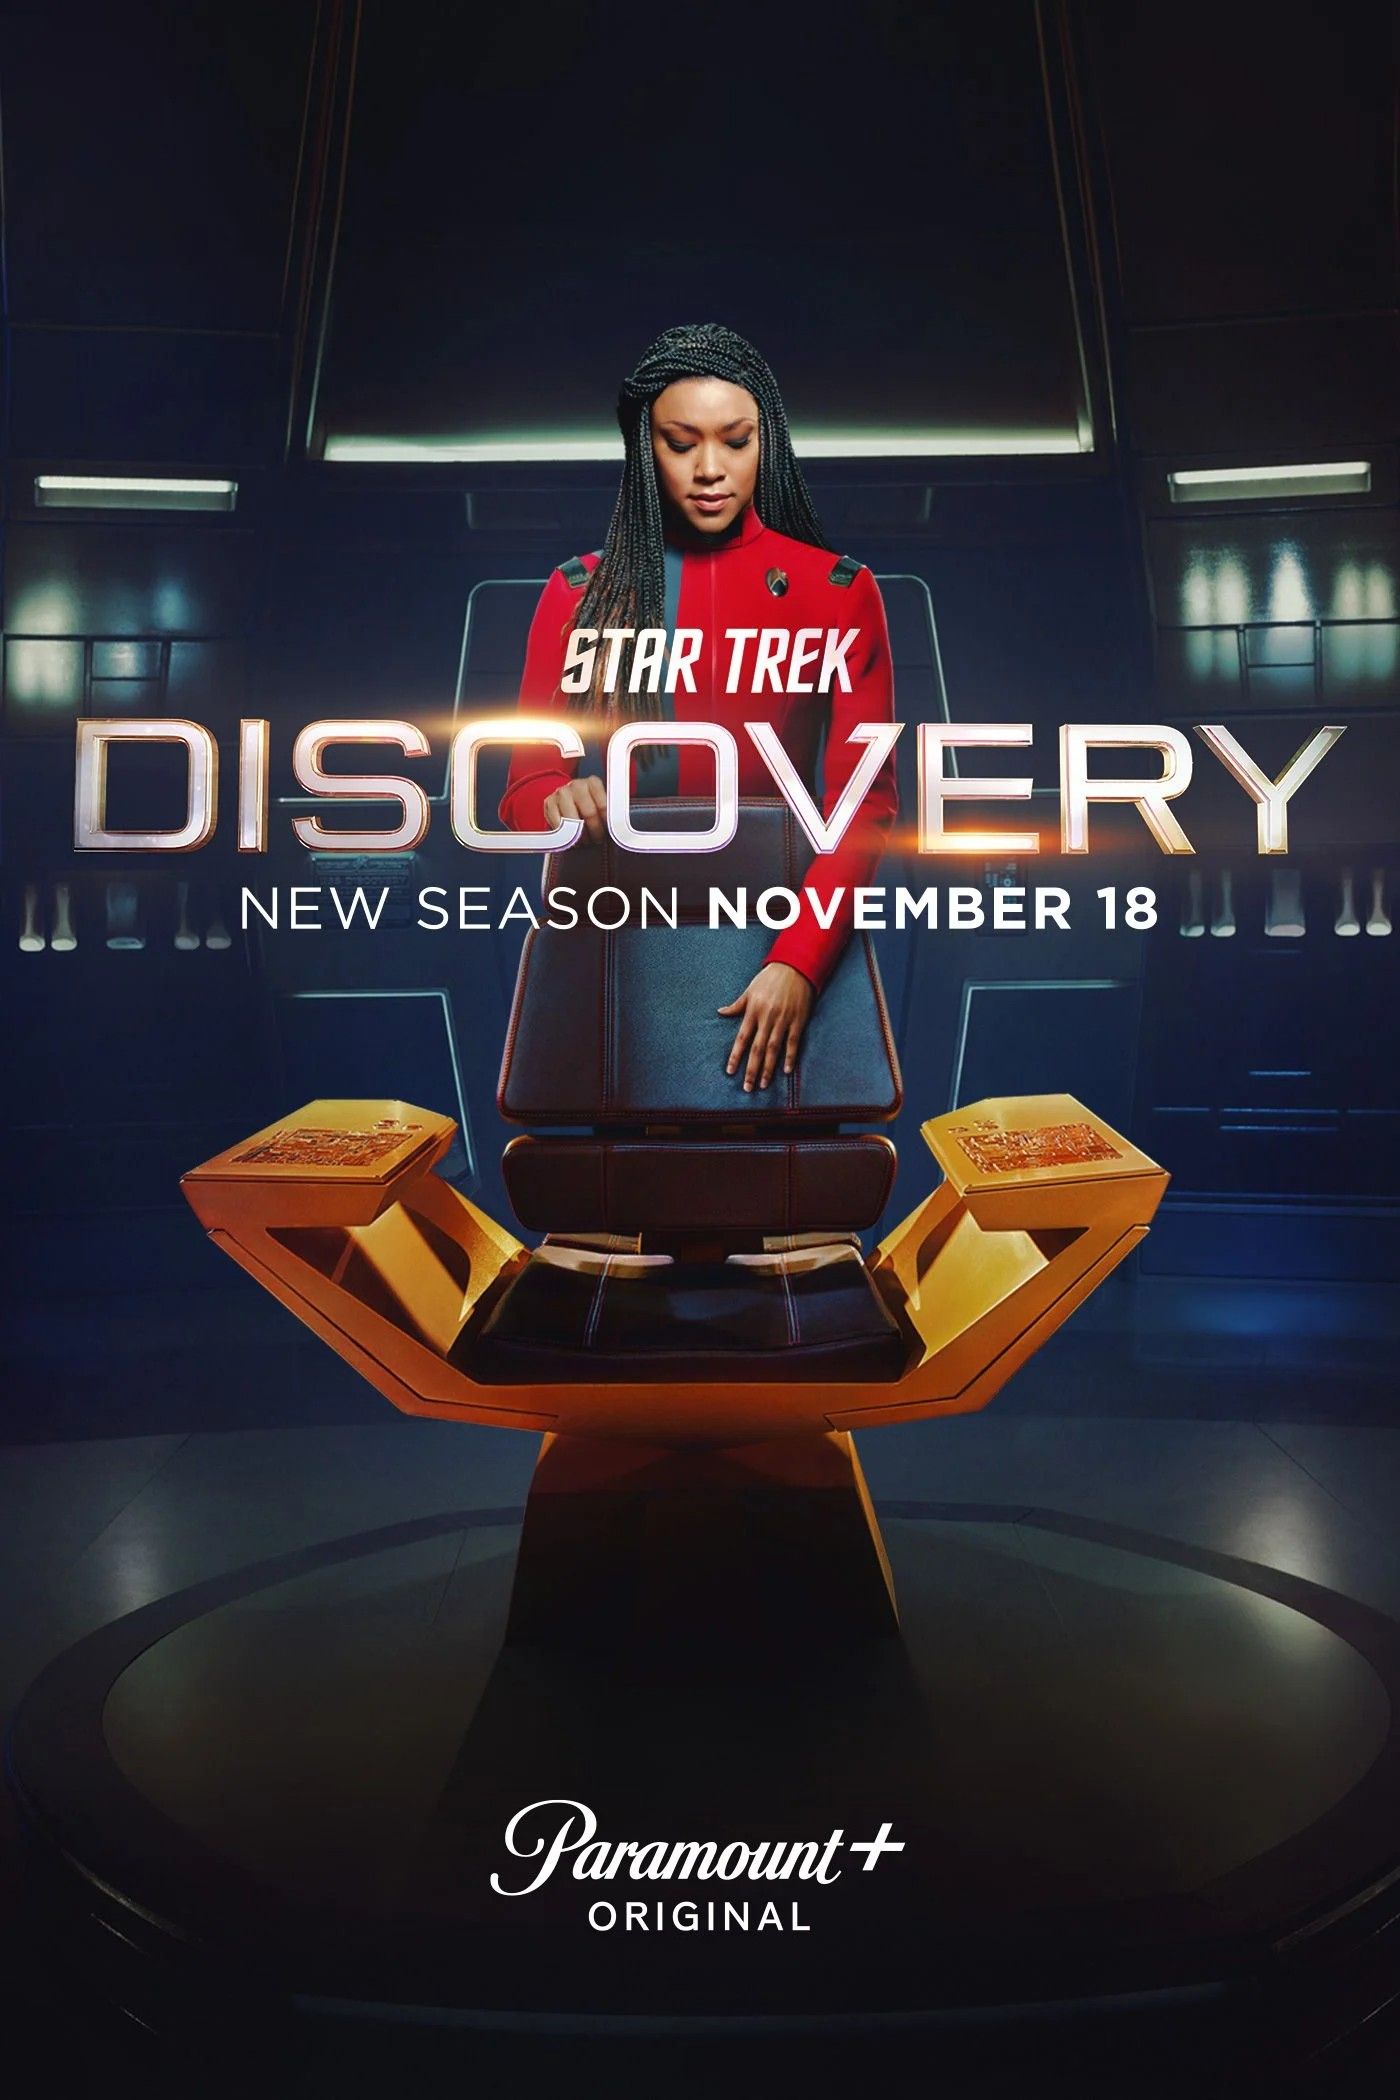 Star Trek Discovery season 4 key art poster